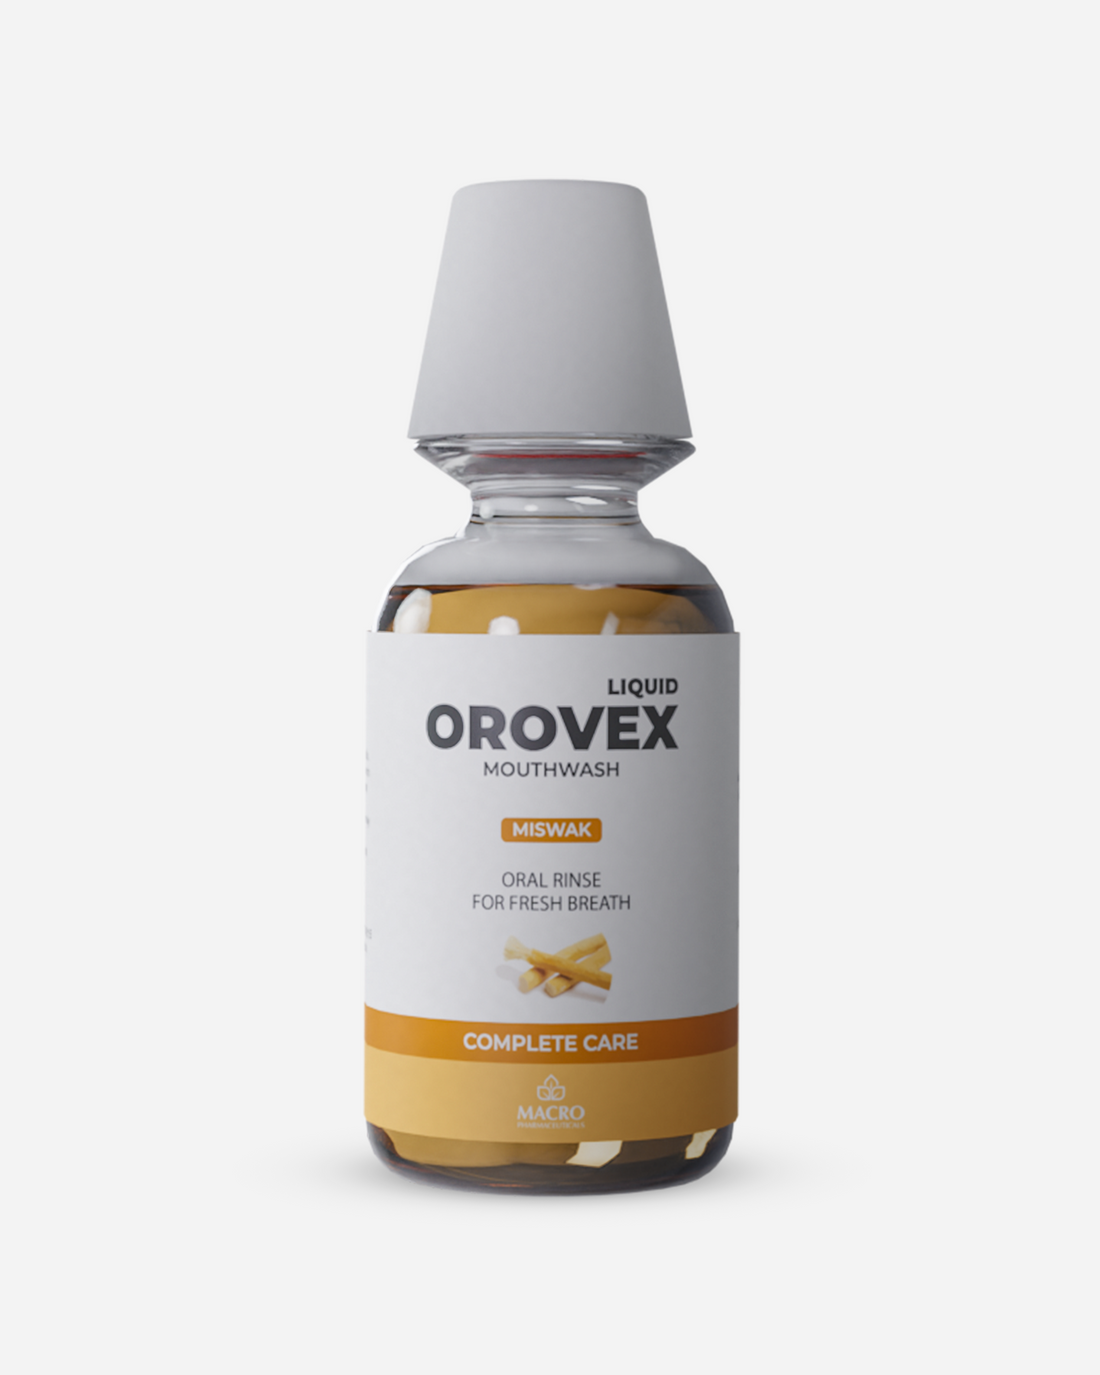 Orovex Miswak